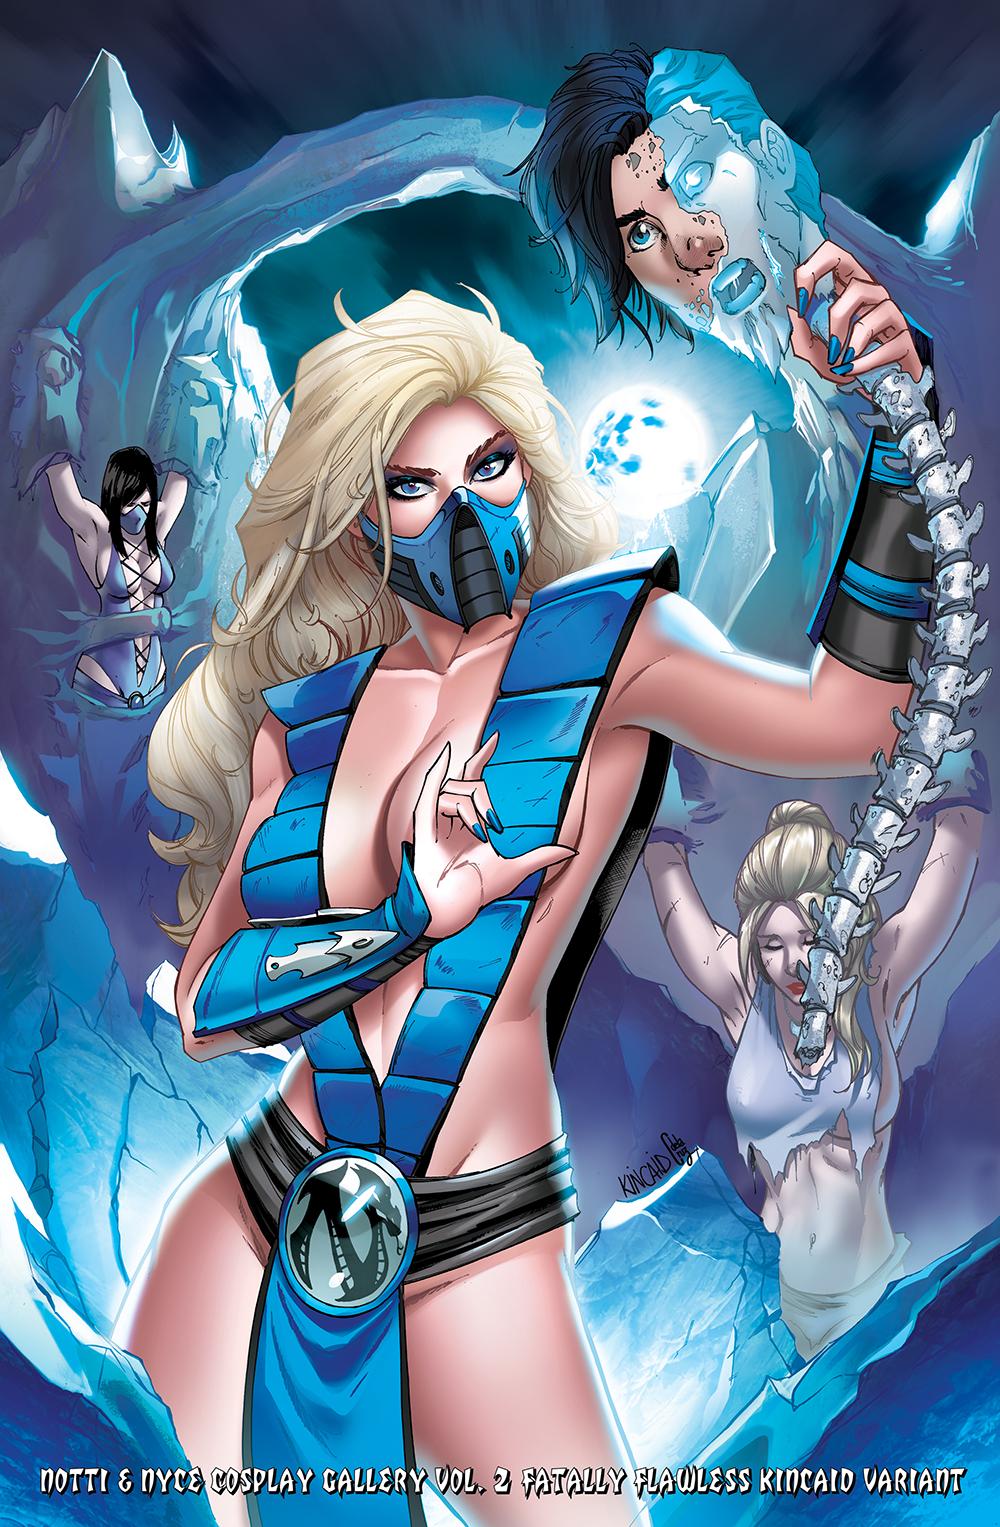 Notti & Nyce Cosplay Gallery Vol. 2 Fatally Flawless Mortal Kombat Sub-Zero Homage Variant Cover by Ryan Kincaid